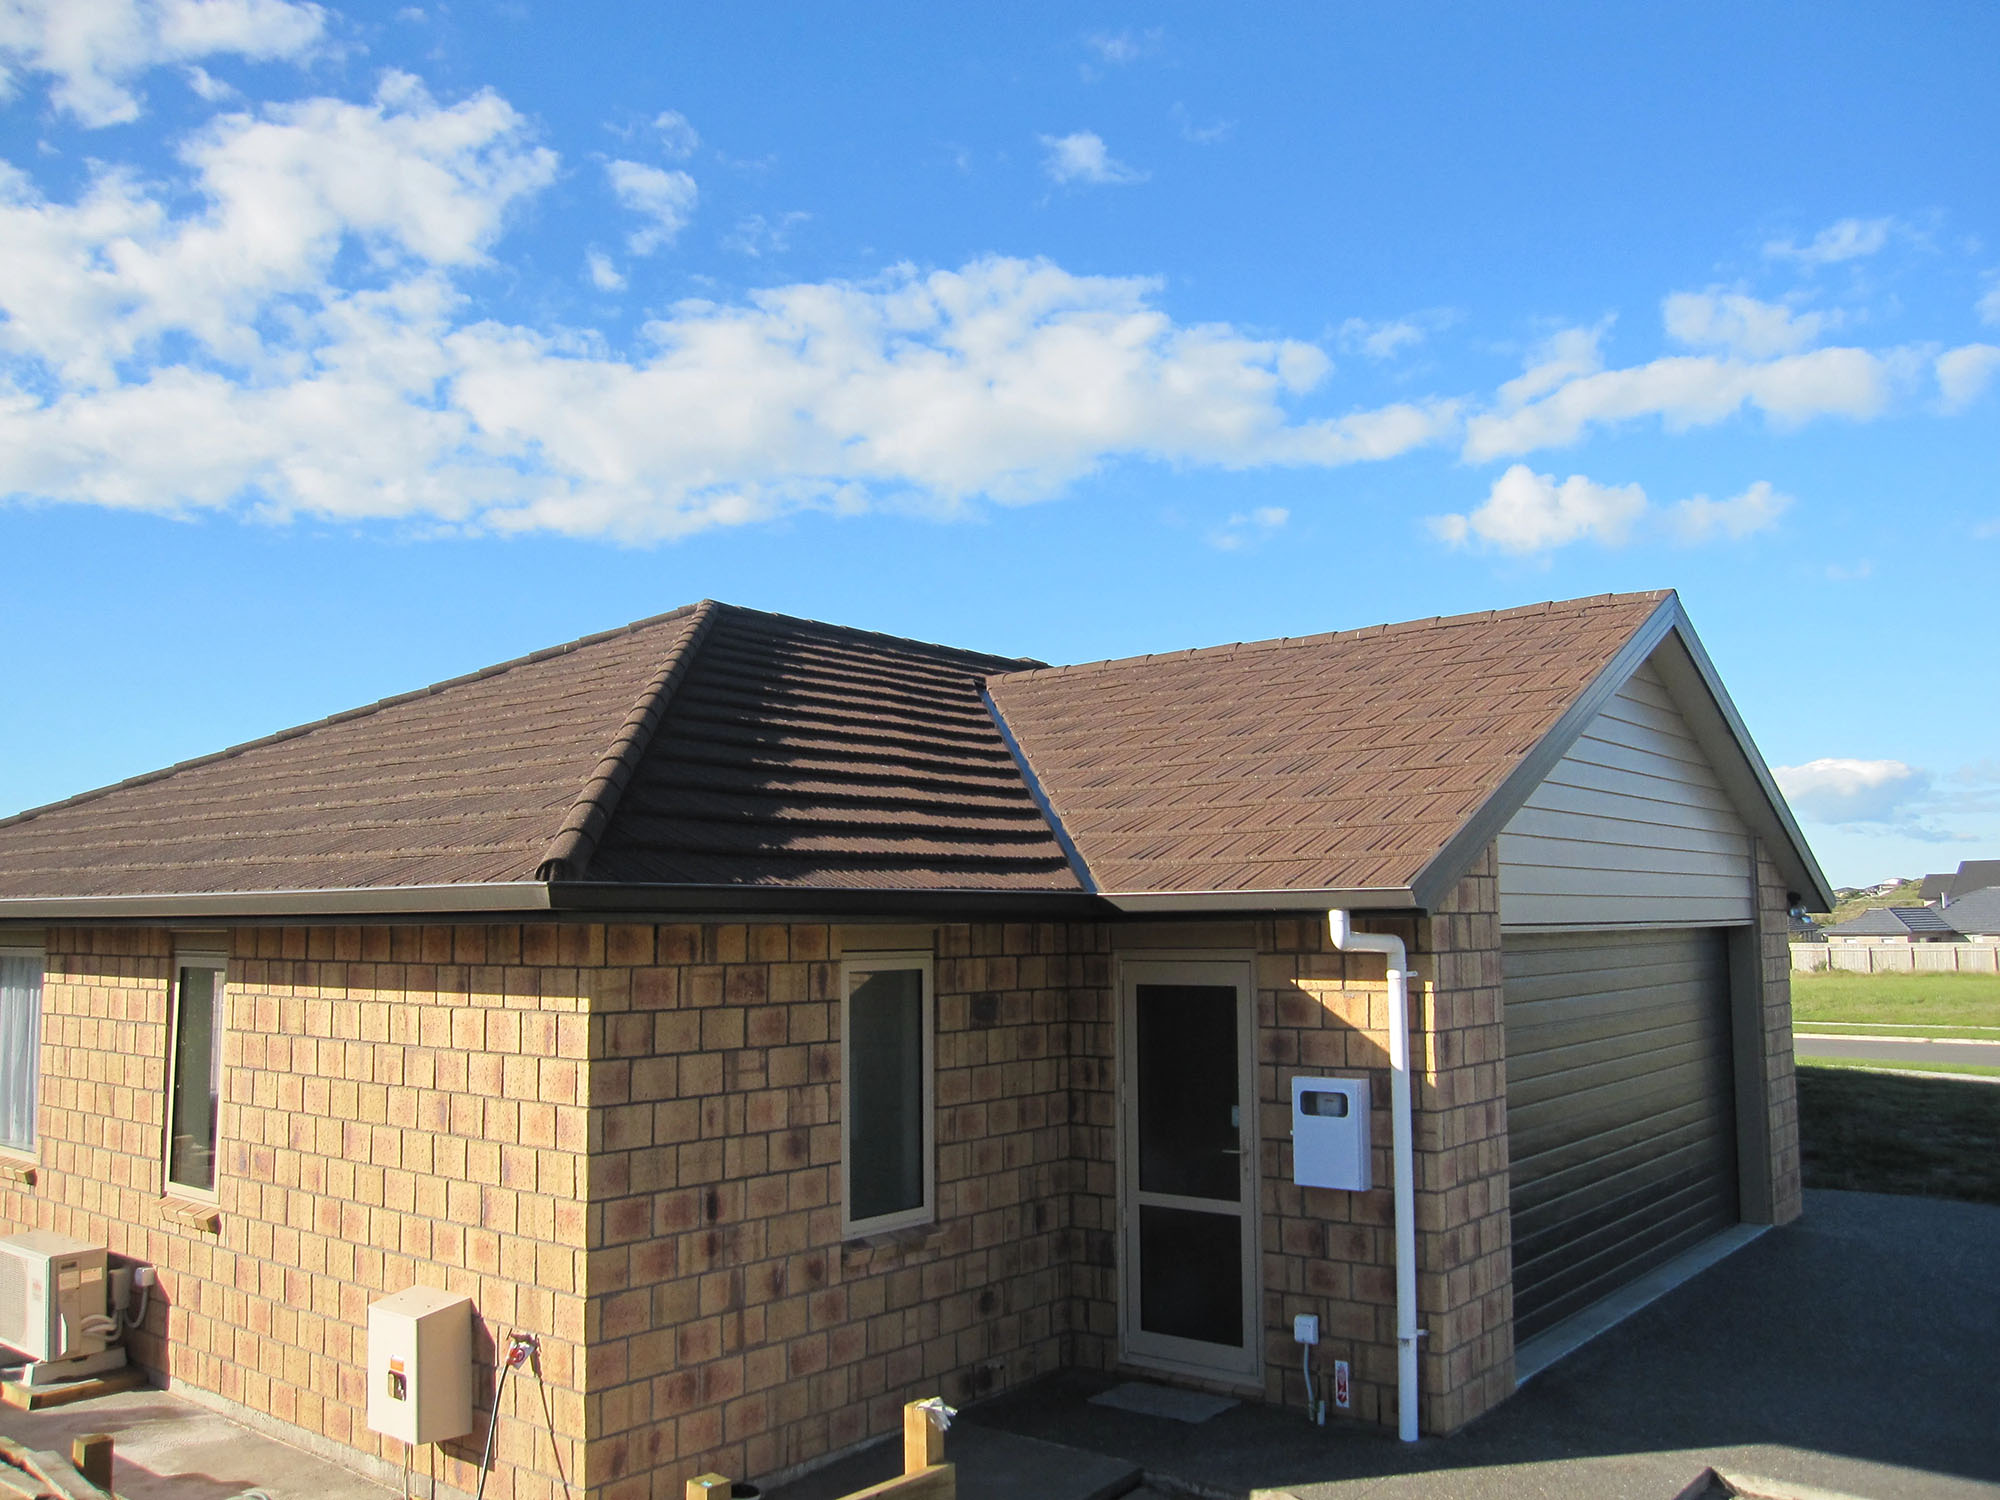 Great Lakes Shake Shingle - Stone Coated Metal Roof